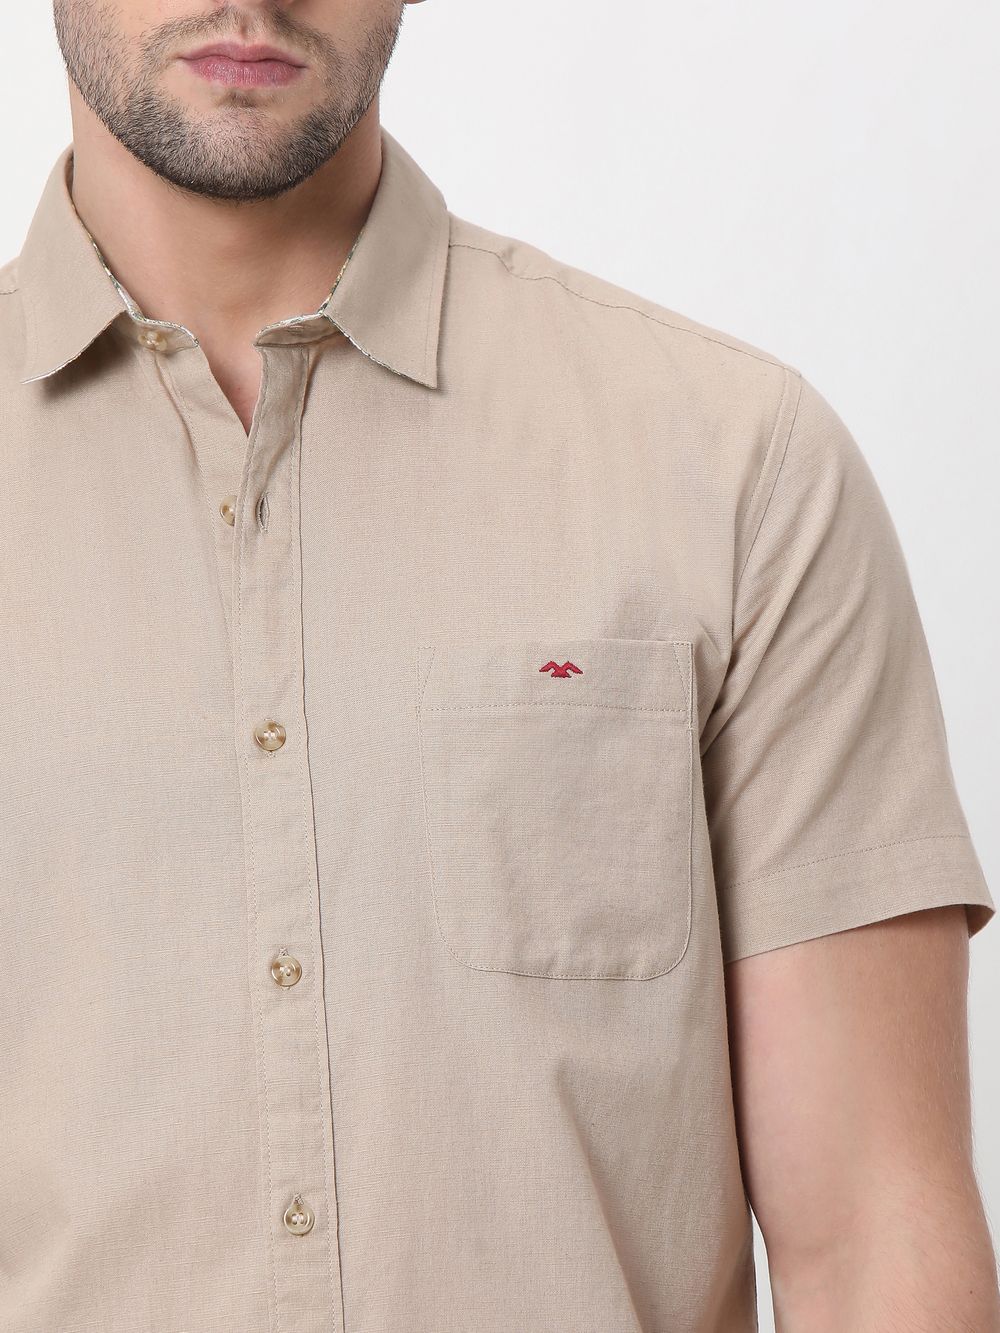 Beige Cotton Linen Plain Shirt